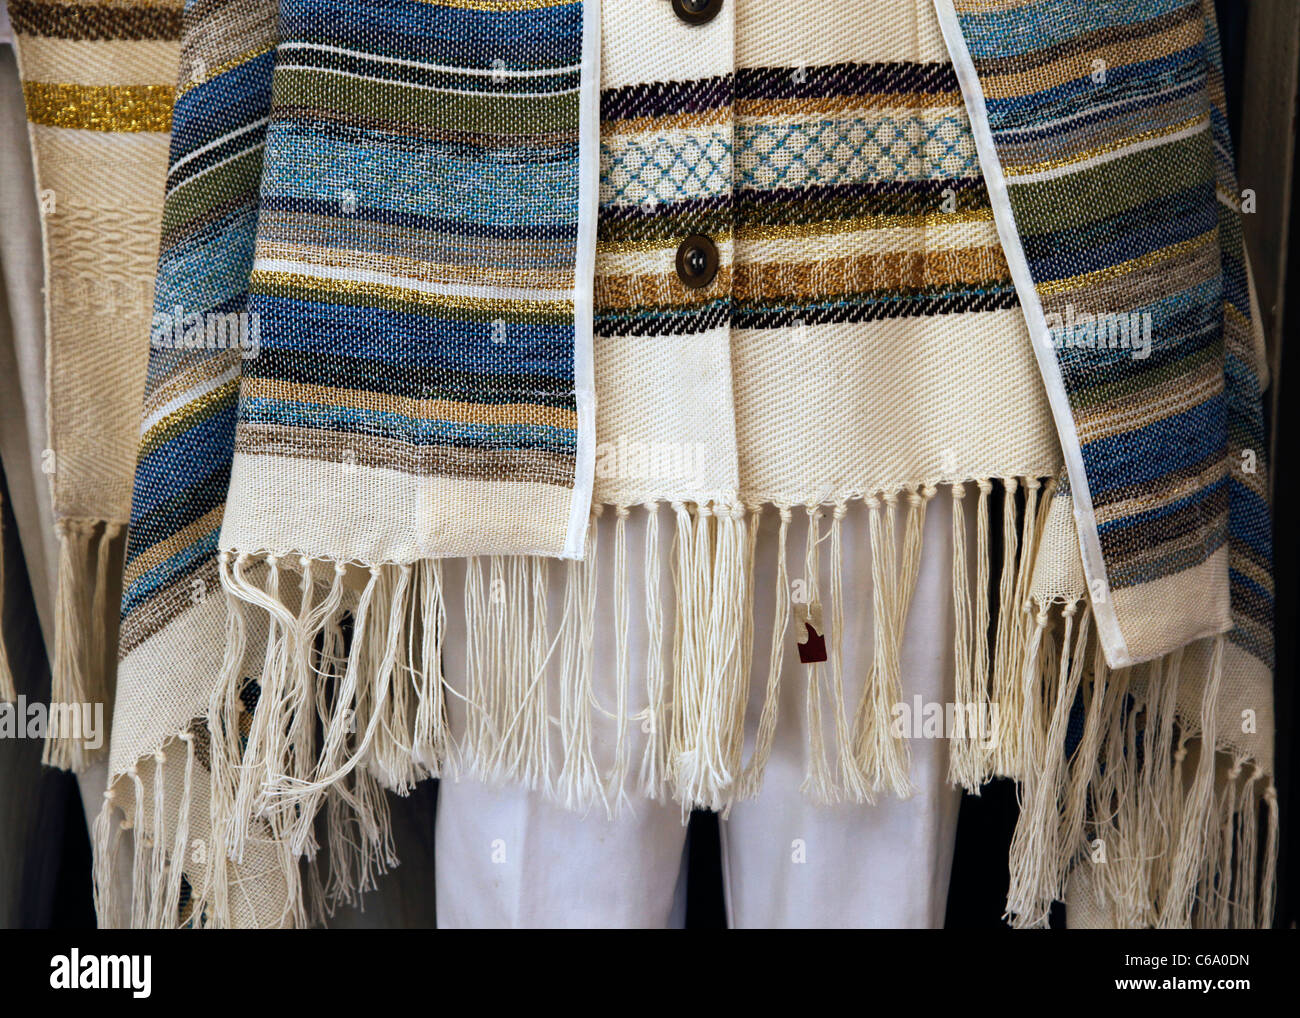 Hebrew Israelite Garment with Tzitzit Fringes